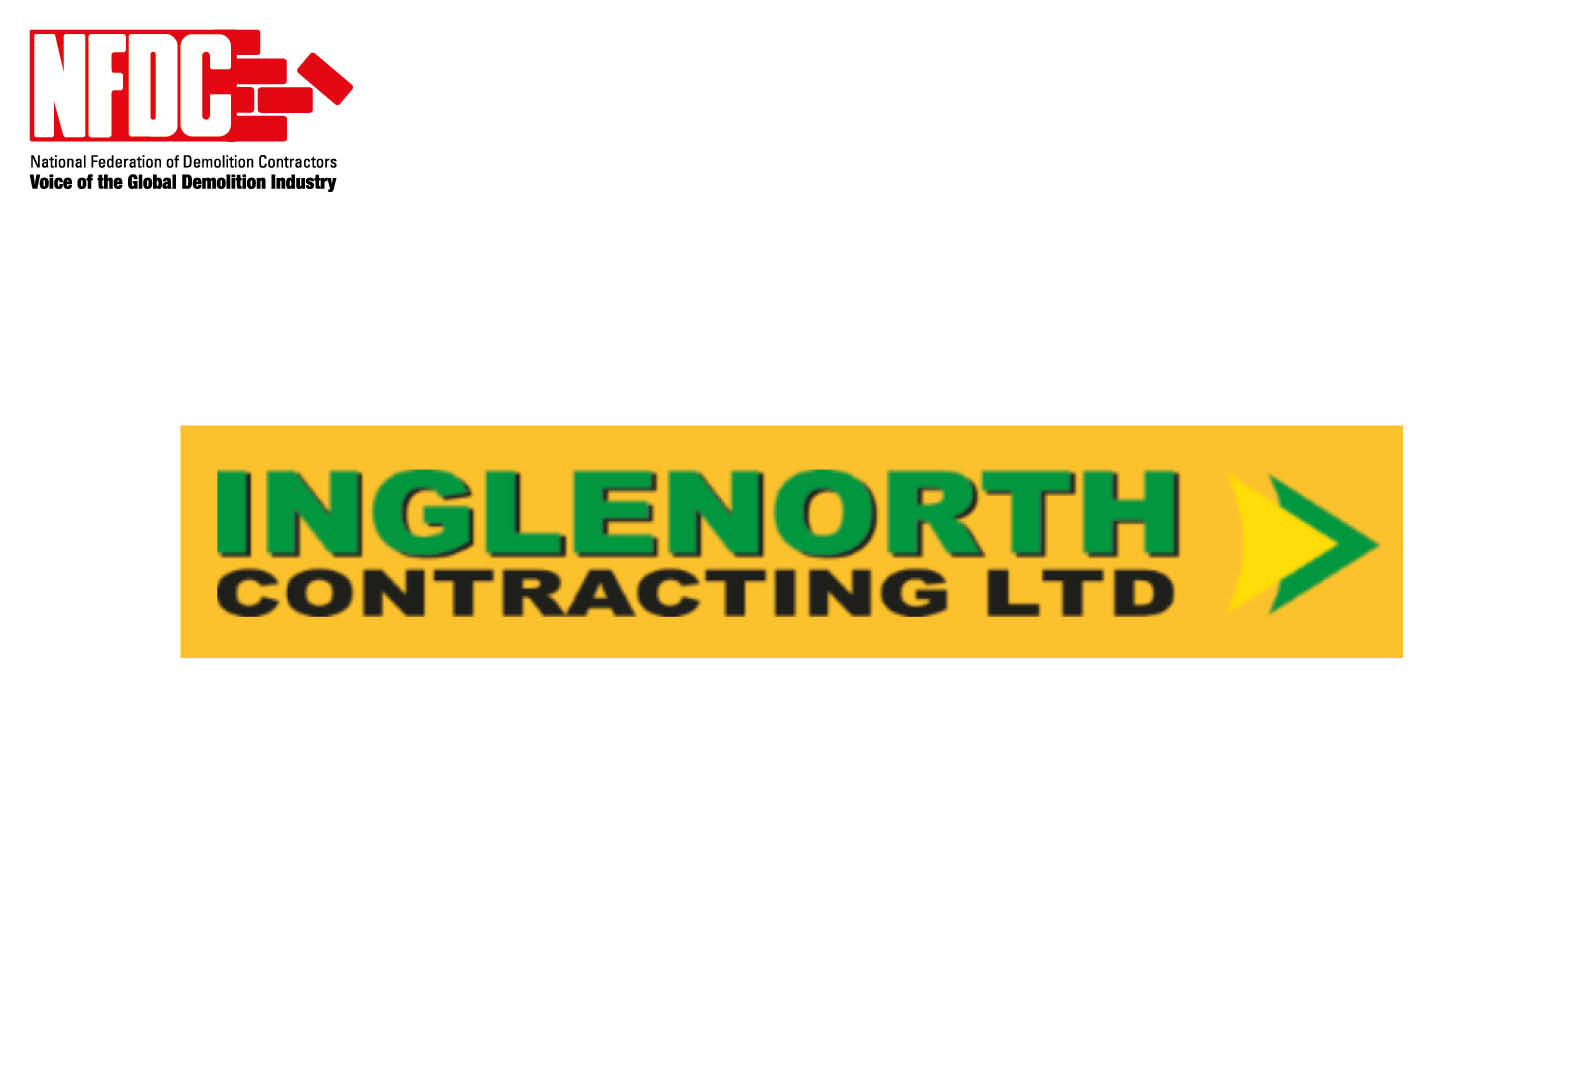 Inglenorth (Contracting) Ltd